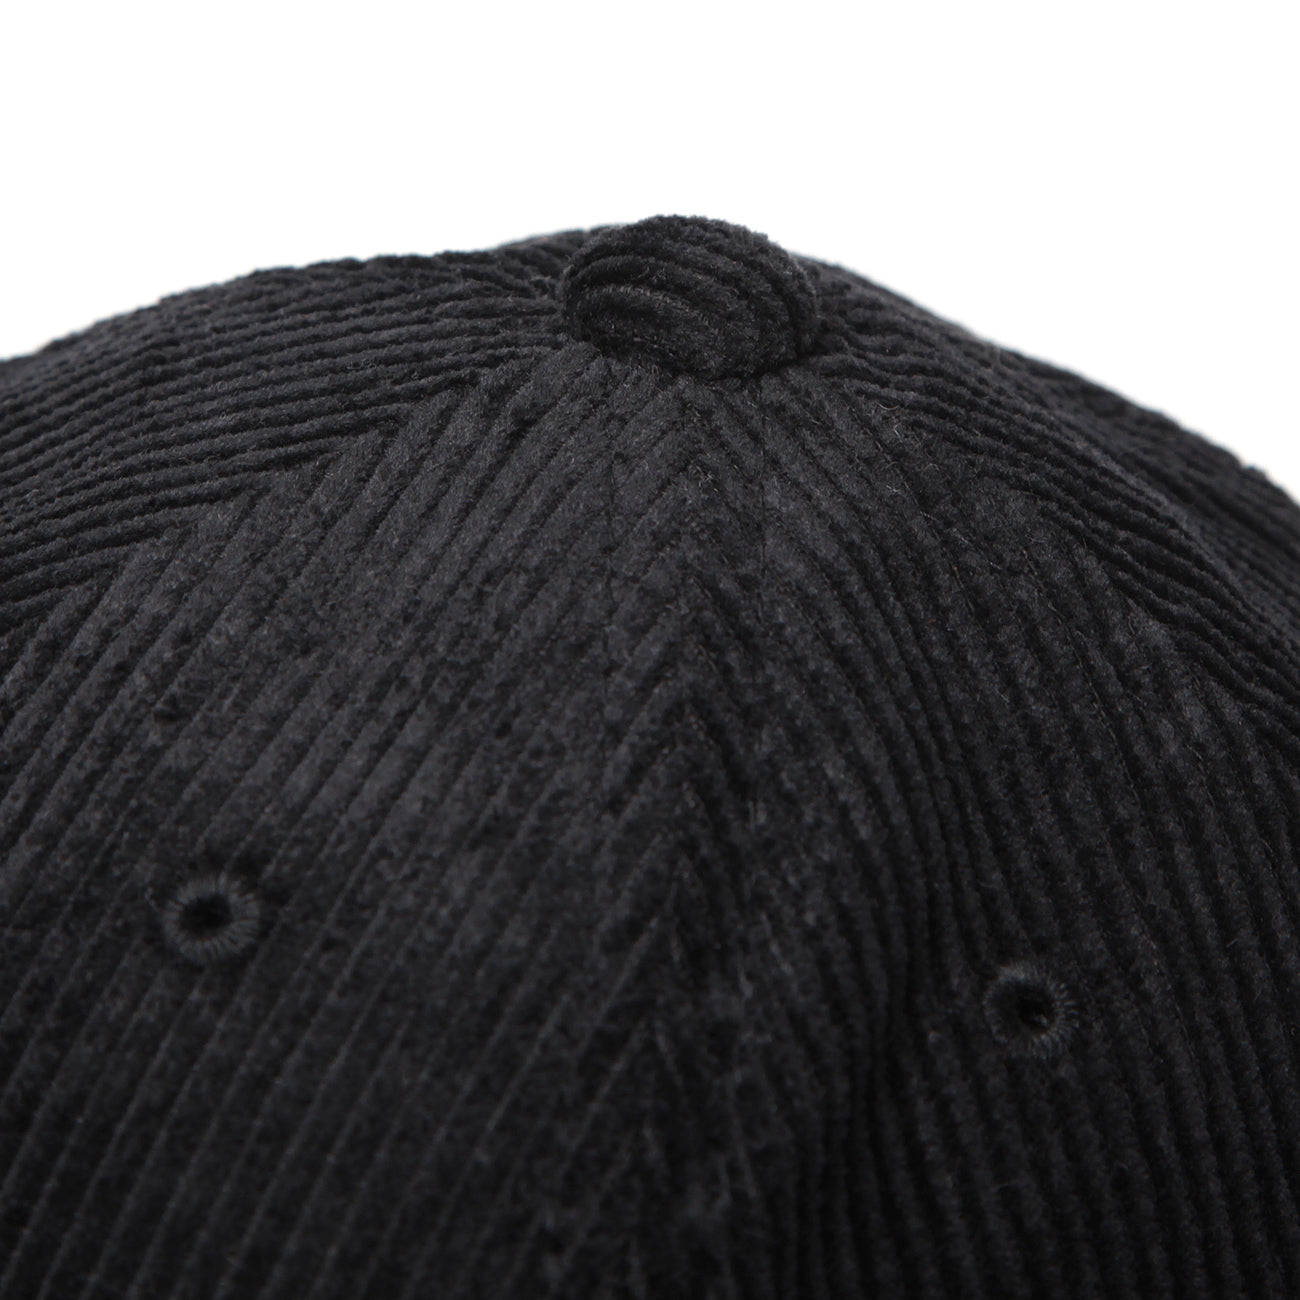 KED CAP S (CORDUROY) - BLACK